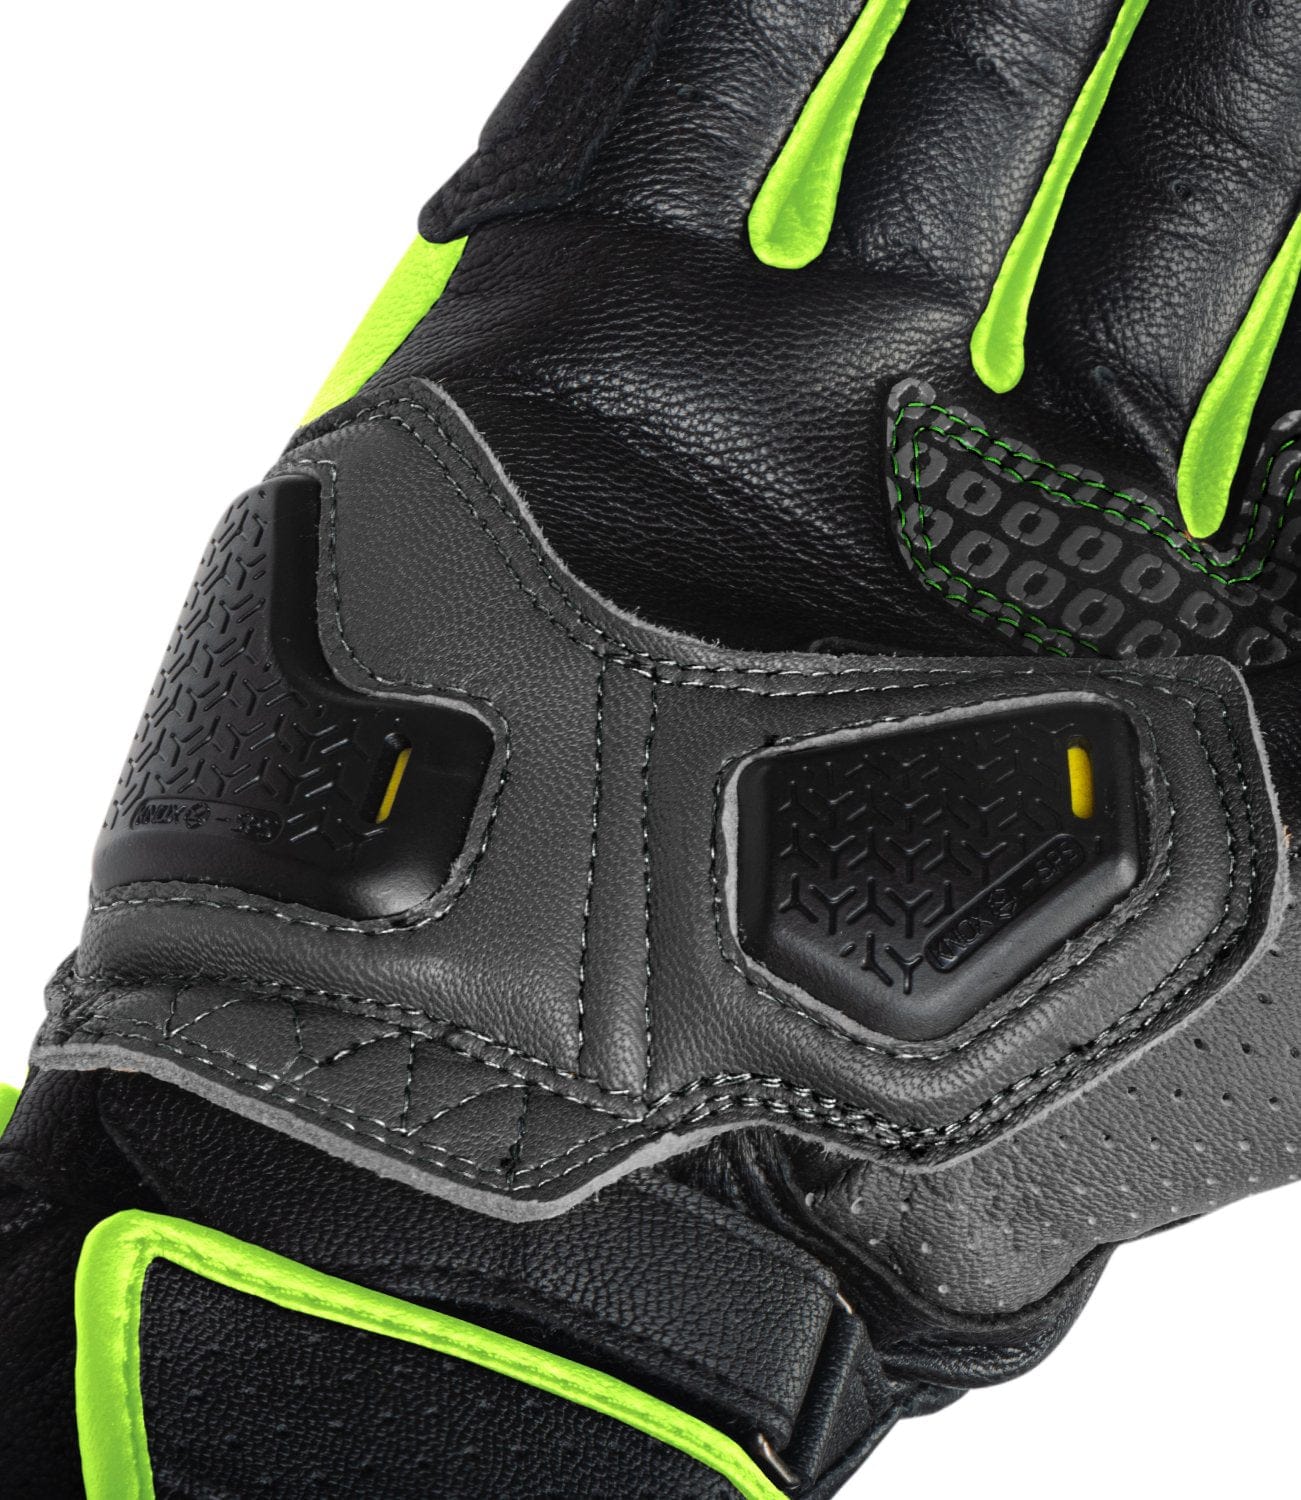 Destination Moto Rynox Storm Evo 2 Gloves Hi Viz Green